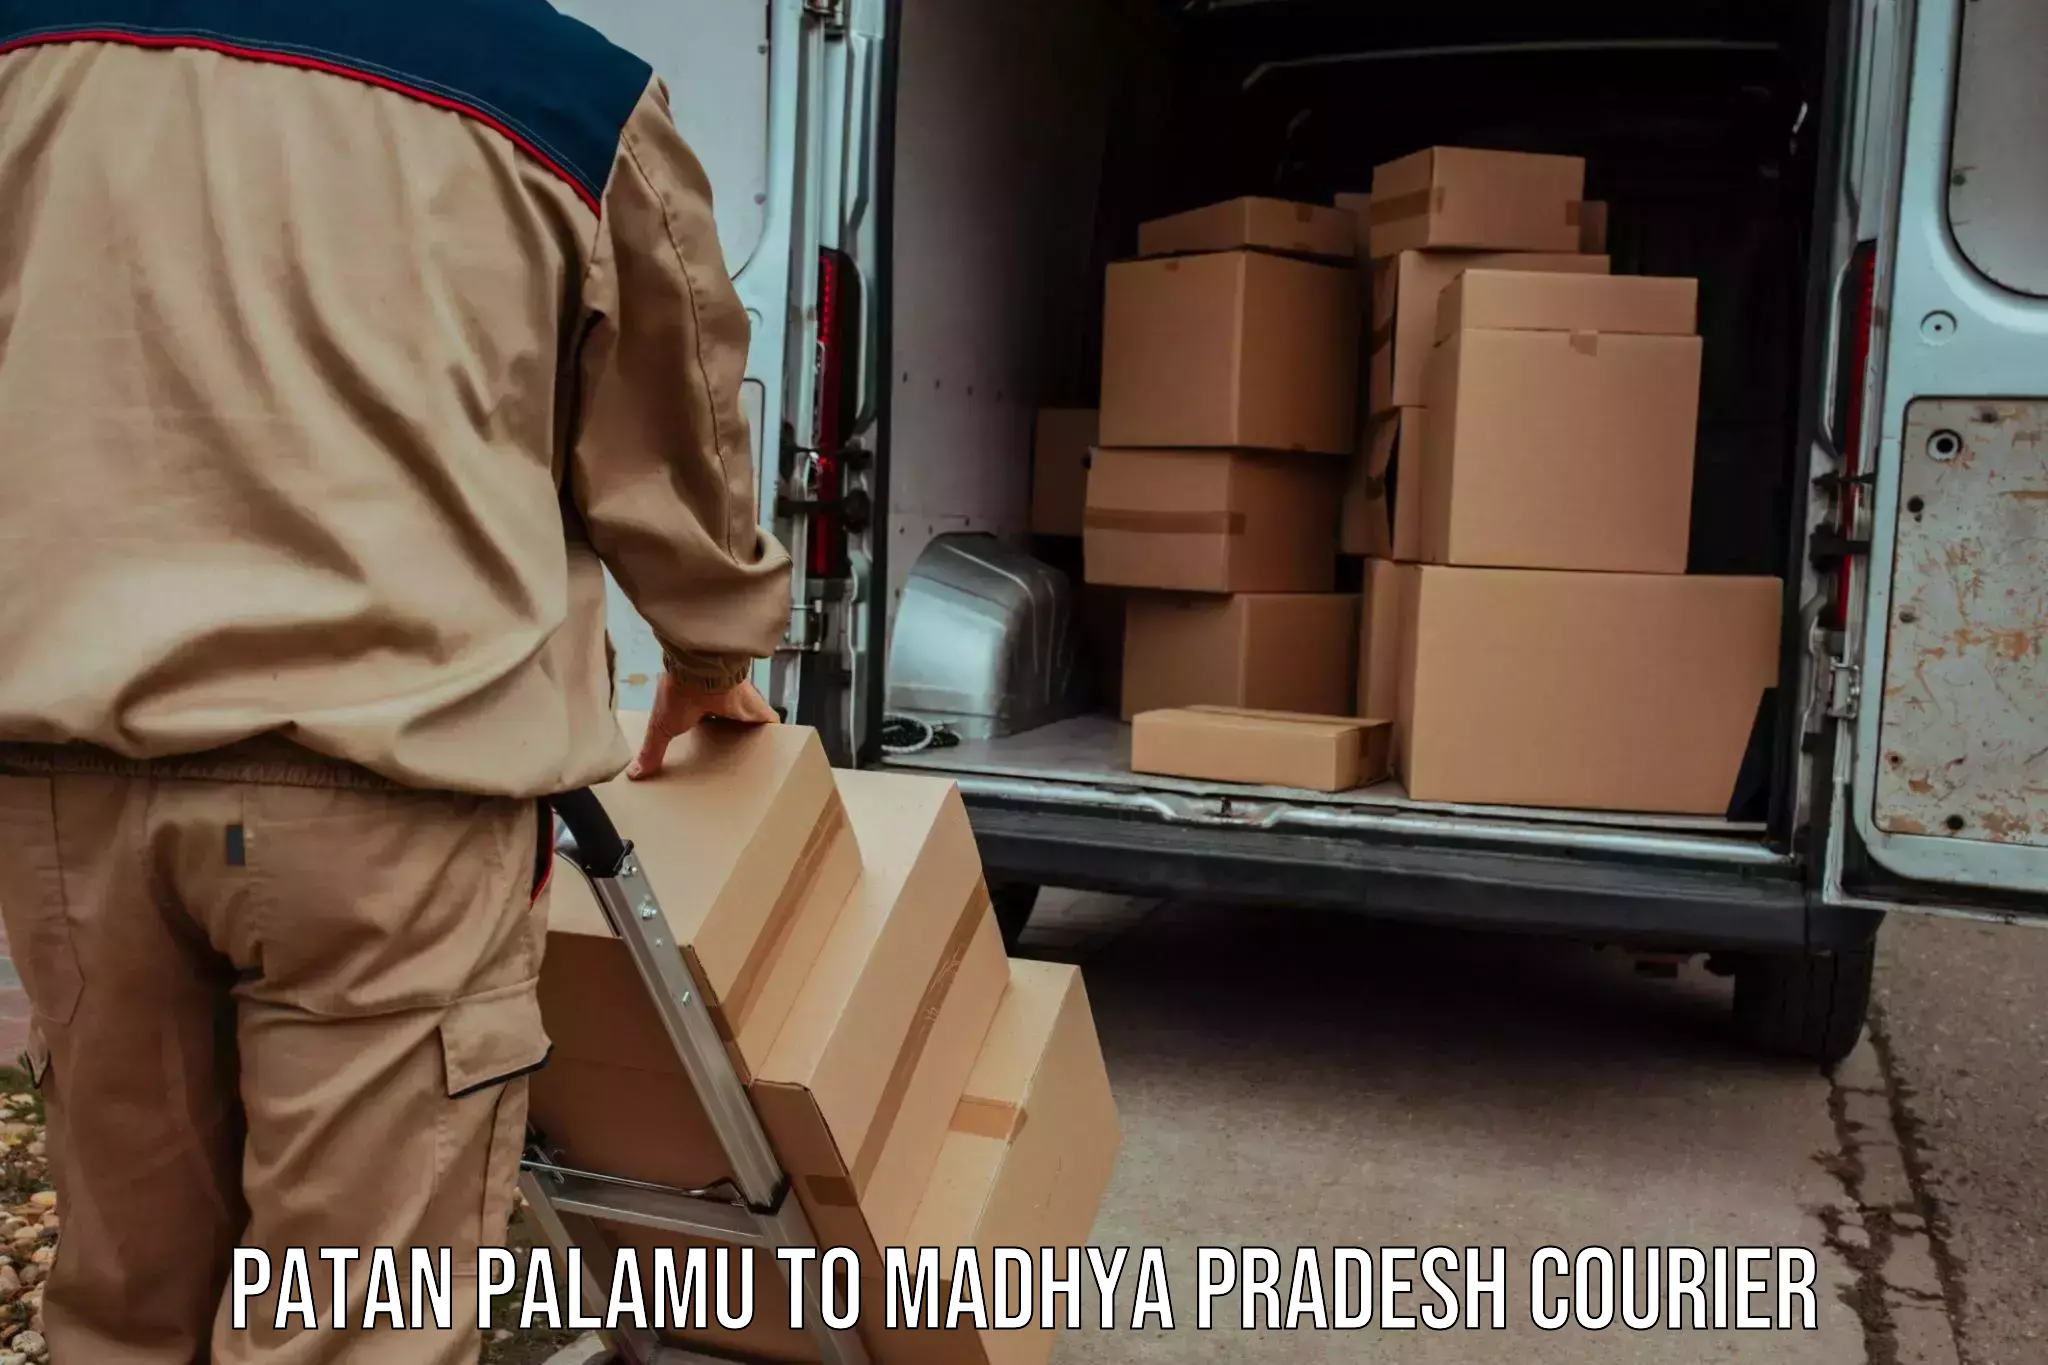 State-of-the-art courier technology Patan Palamu to Sohagi